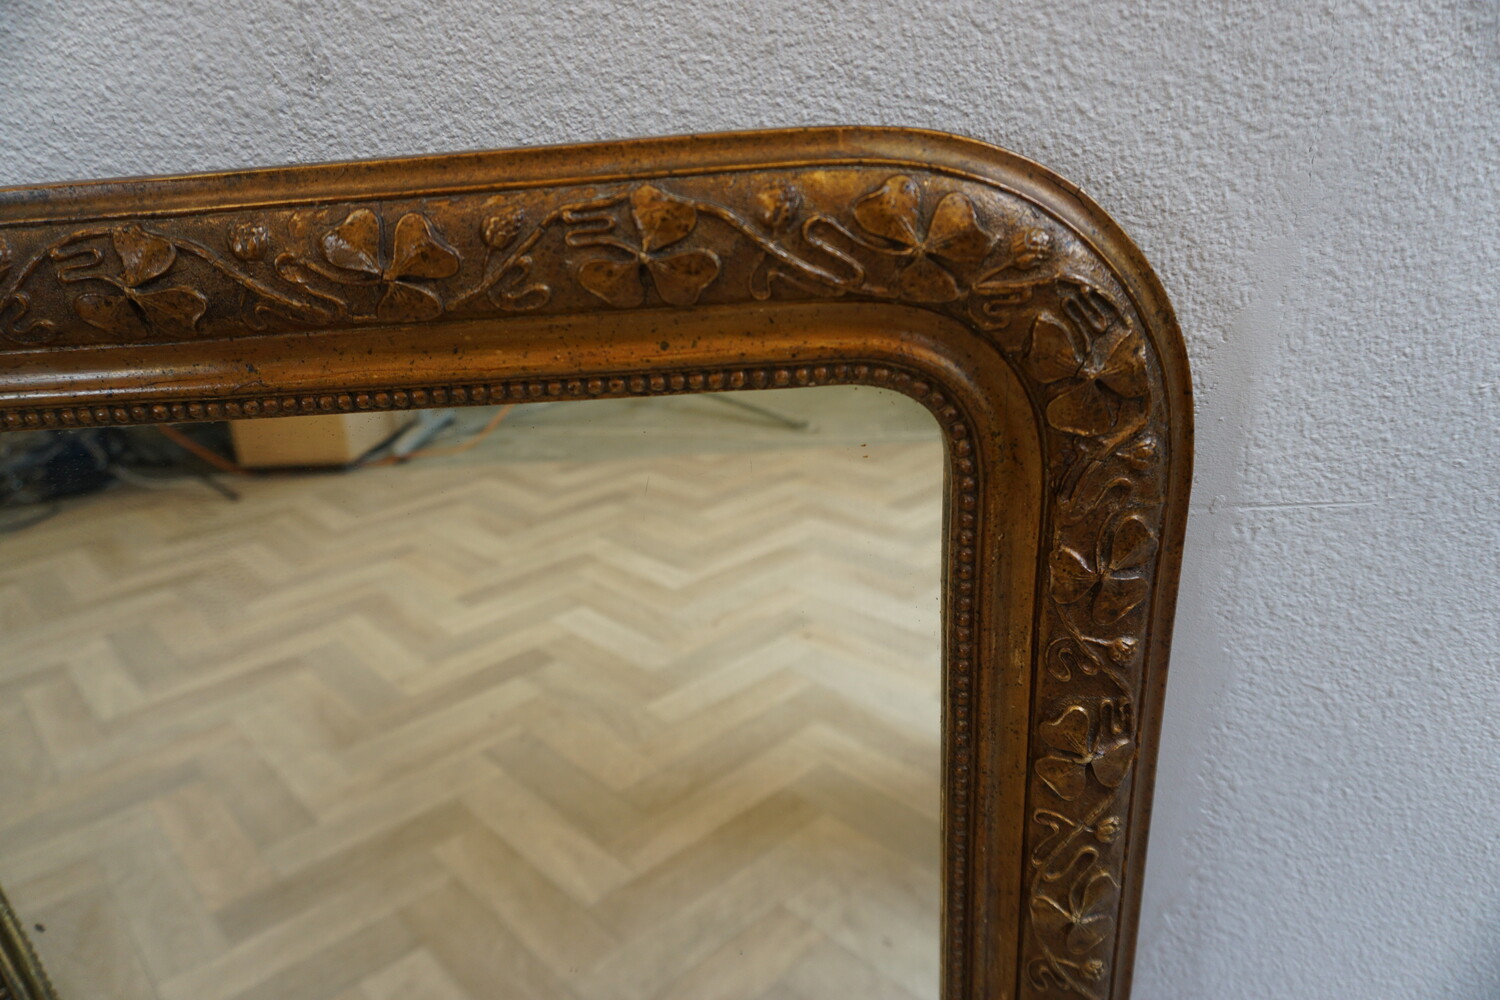 French vintage mirrorSOLD